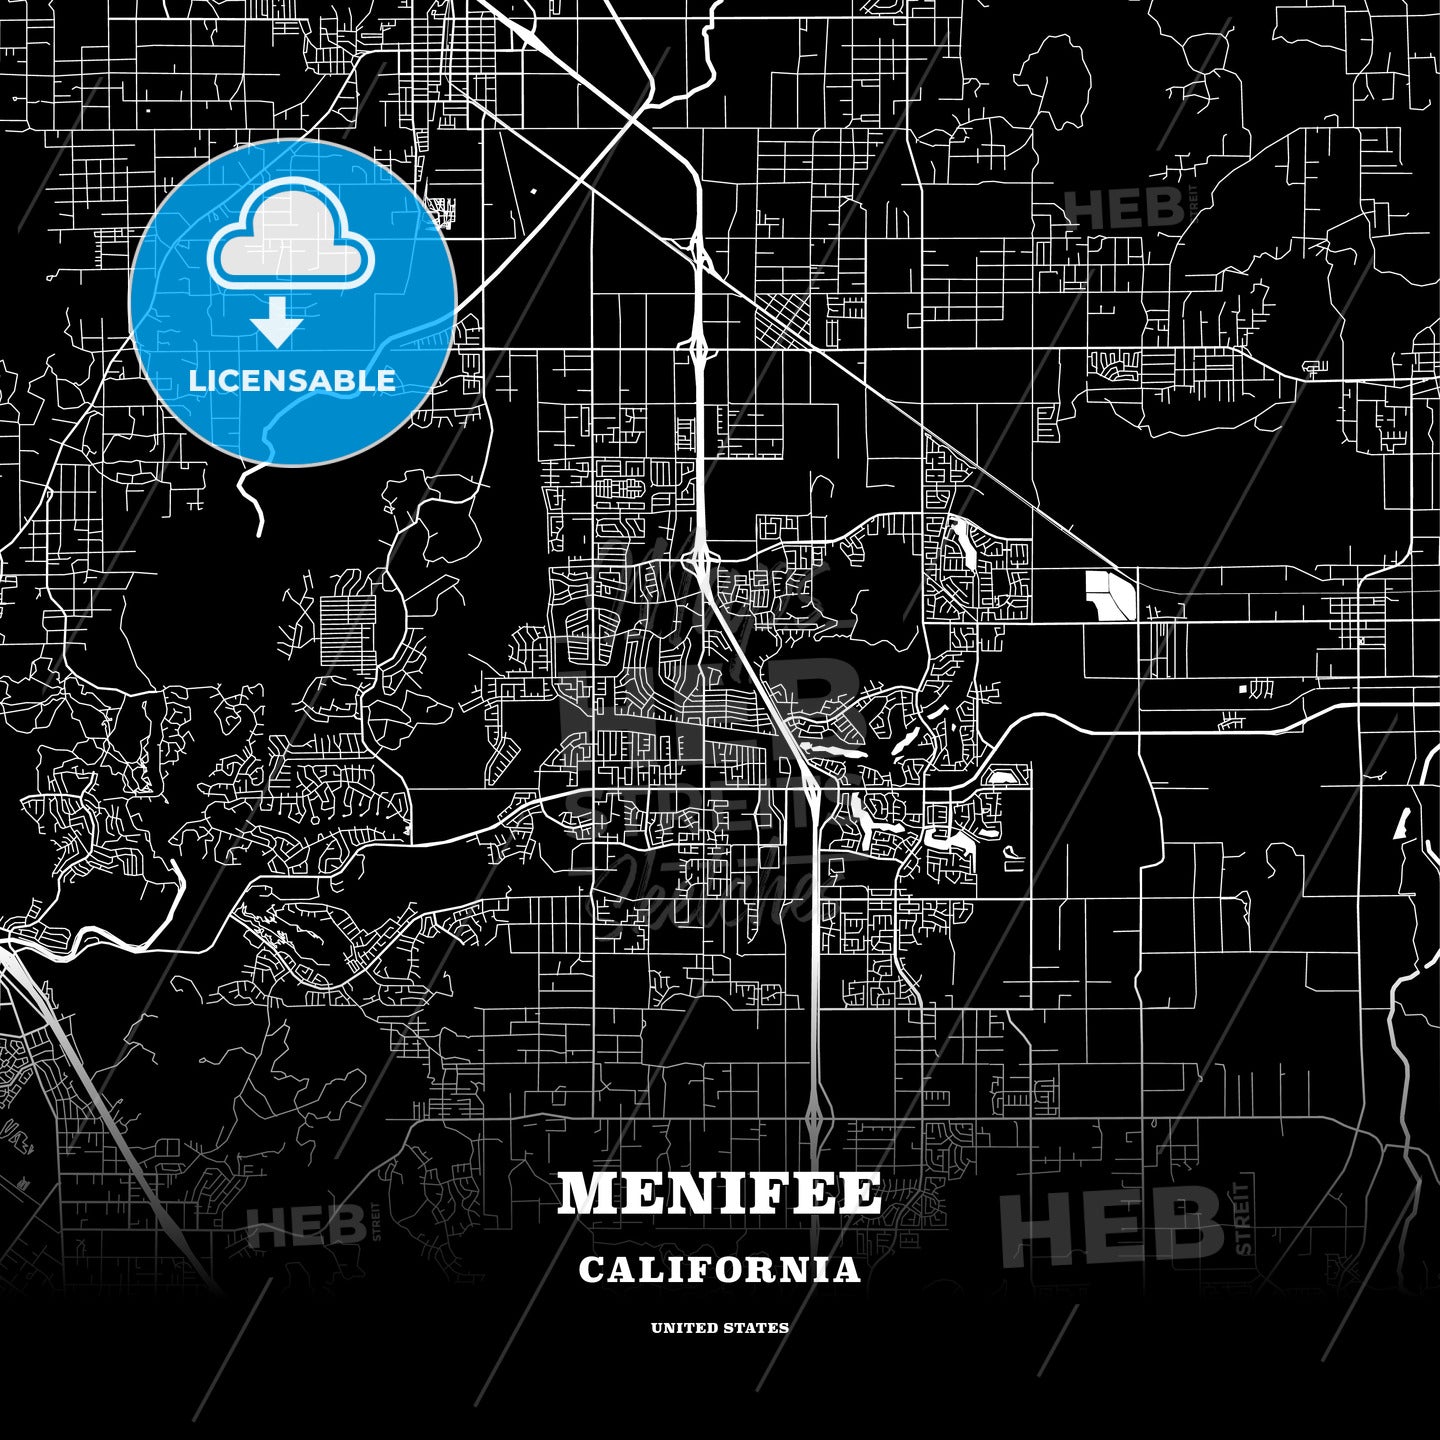 Menifee, California, USA map